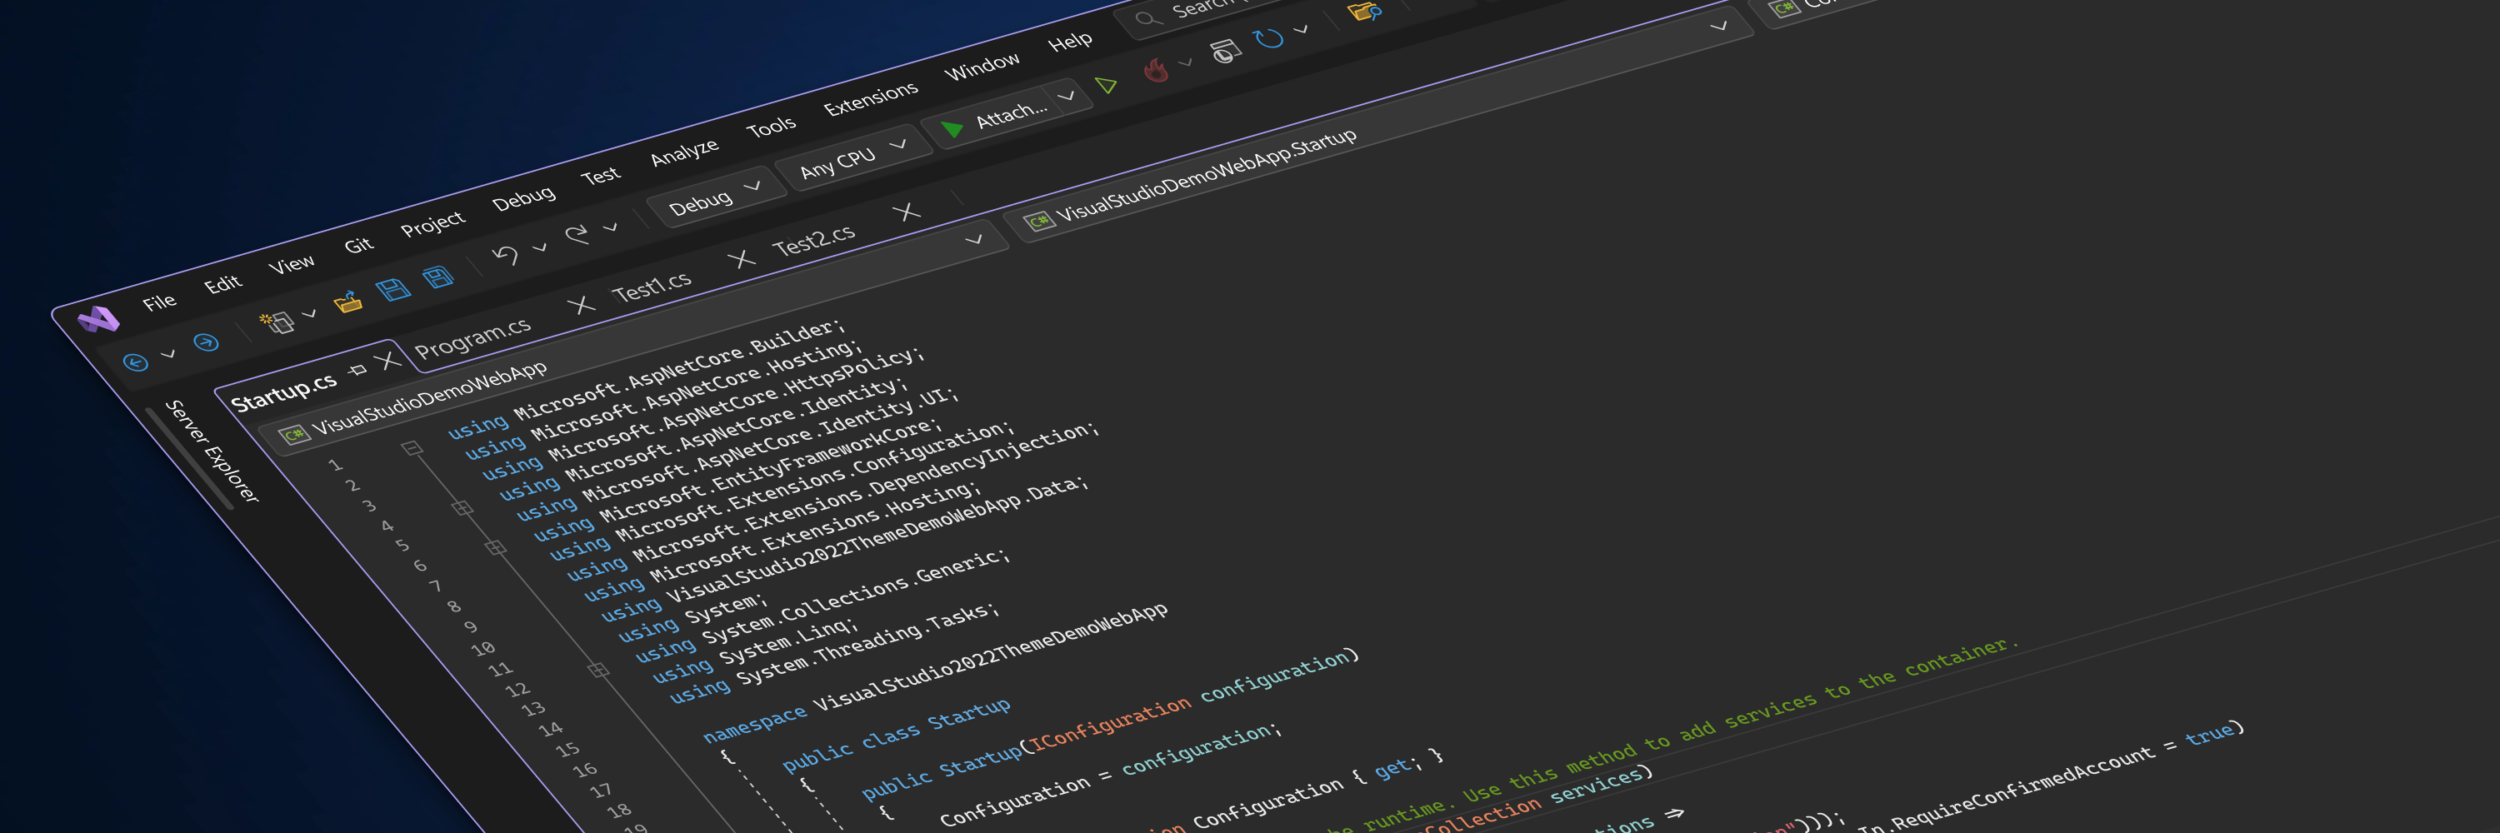 A stylized screenshot showing the new Visual Studio UI in dark theme